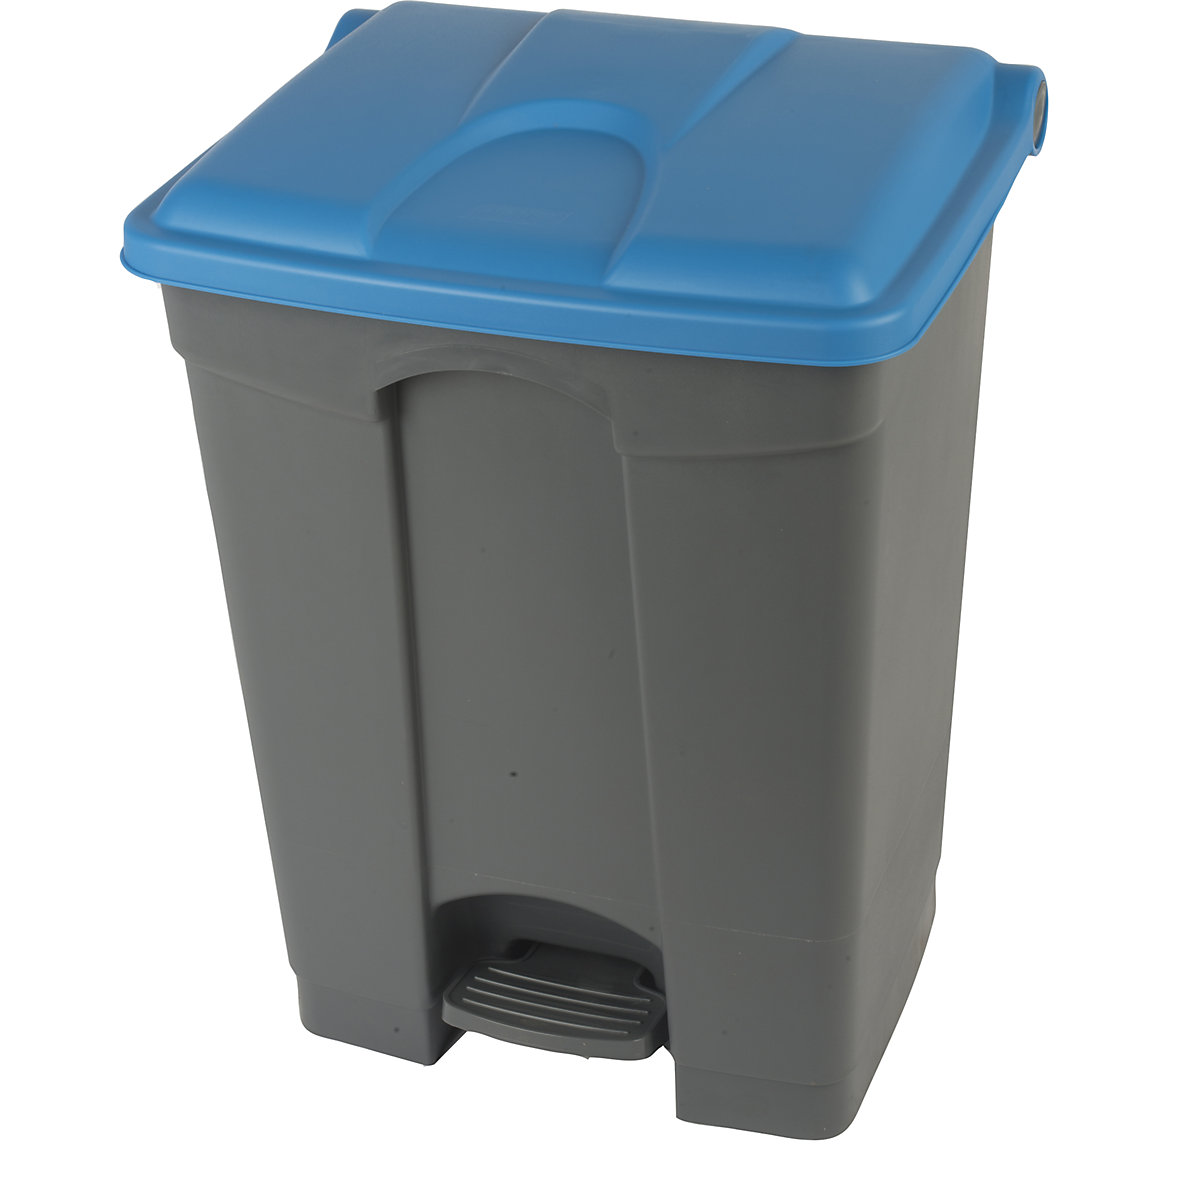 EUROKRAFTbasic – Afvalverzamelaar met pedaal, inhoud 70 l, b x h x d = 505 x 675 x 415 mm, grijs, deksel blauw